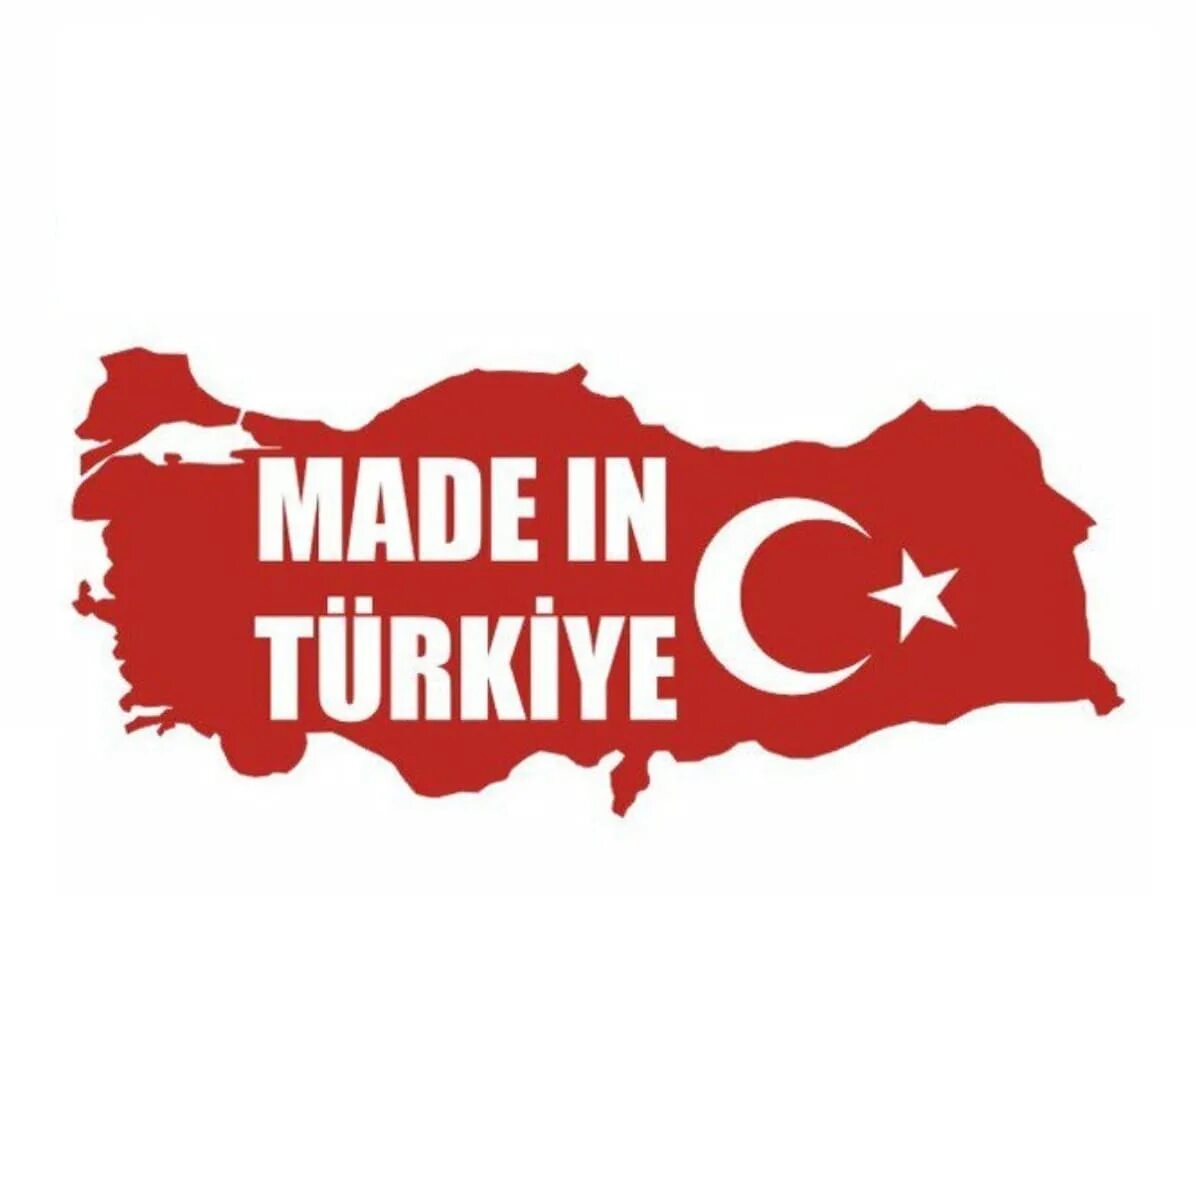 Turkey word. Маде ин Турция. Made in Turkey логотип. Произведено в Турции. Знак сделано в Турции.